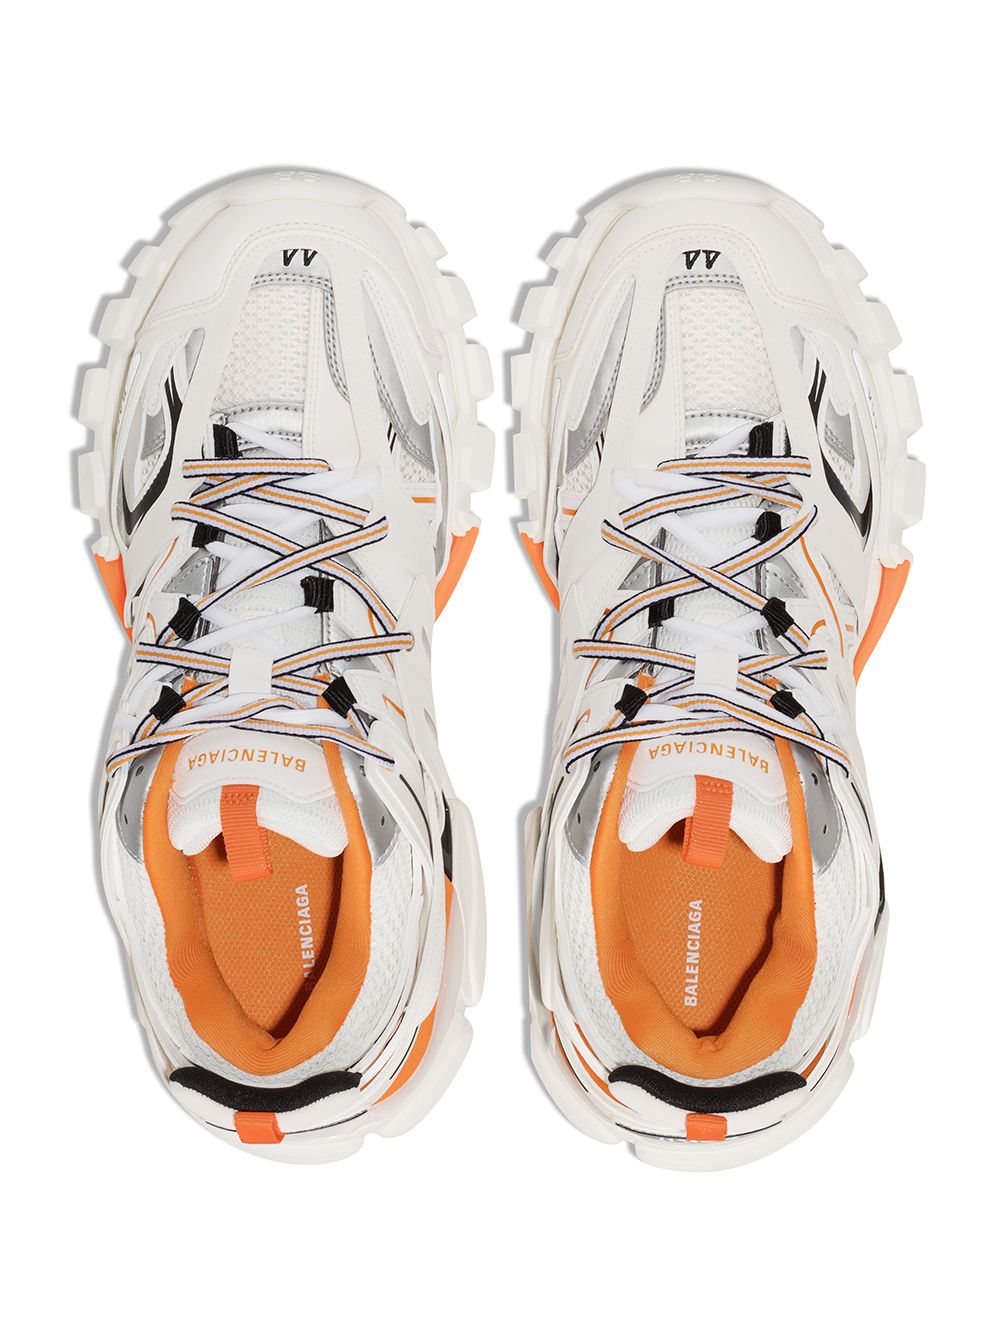 Balenciaga Track White Sneakers Size 41  eBay